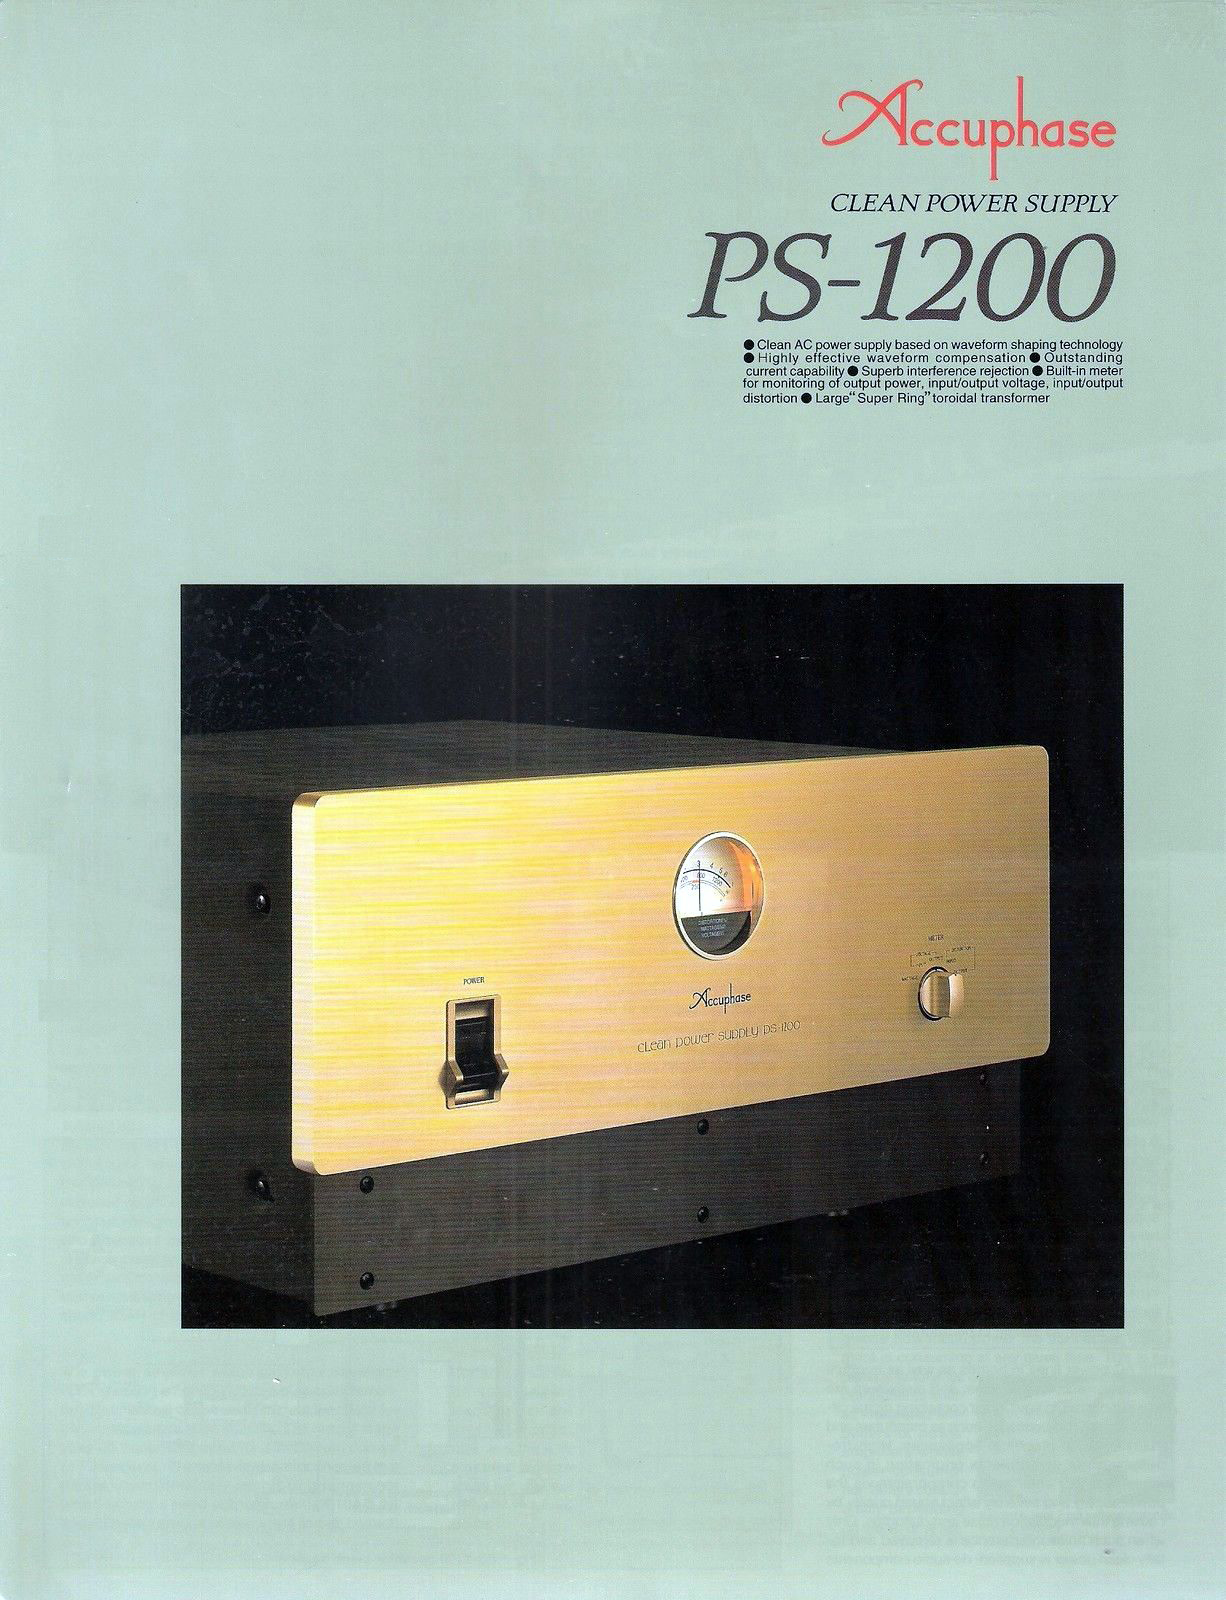 Accuphase PS-1200-Prospekt-1997.jpg